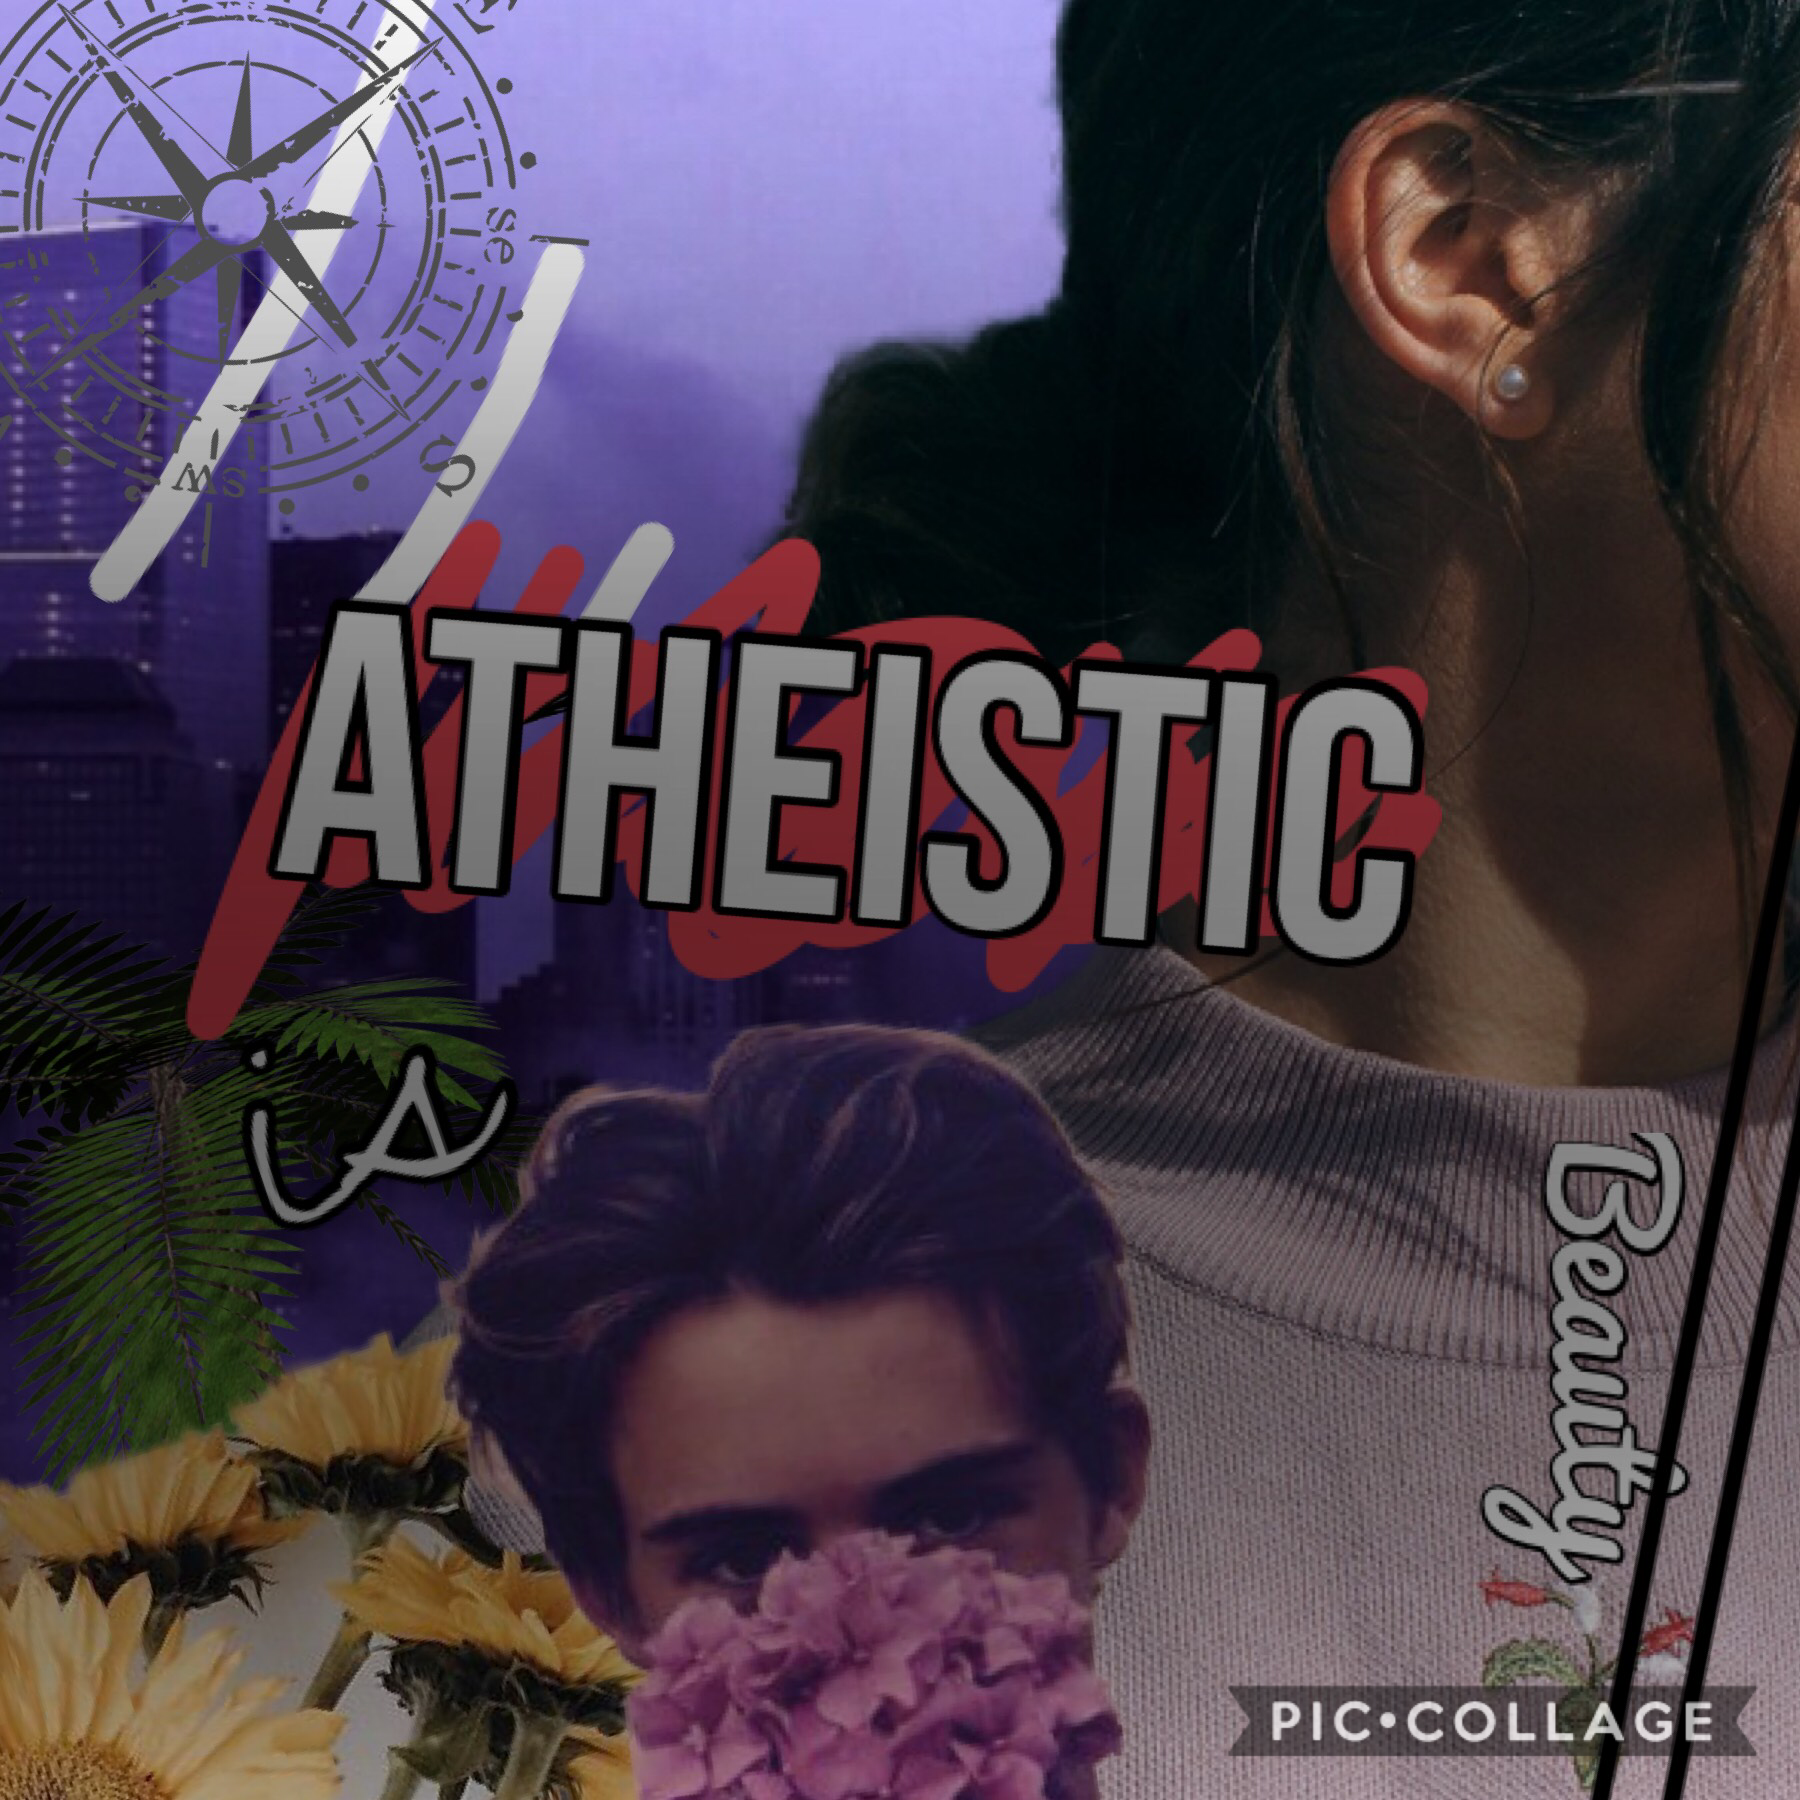 Atheistic Collab